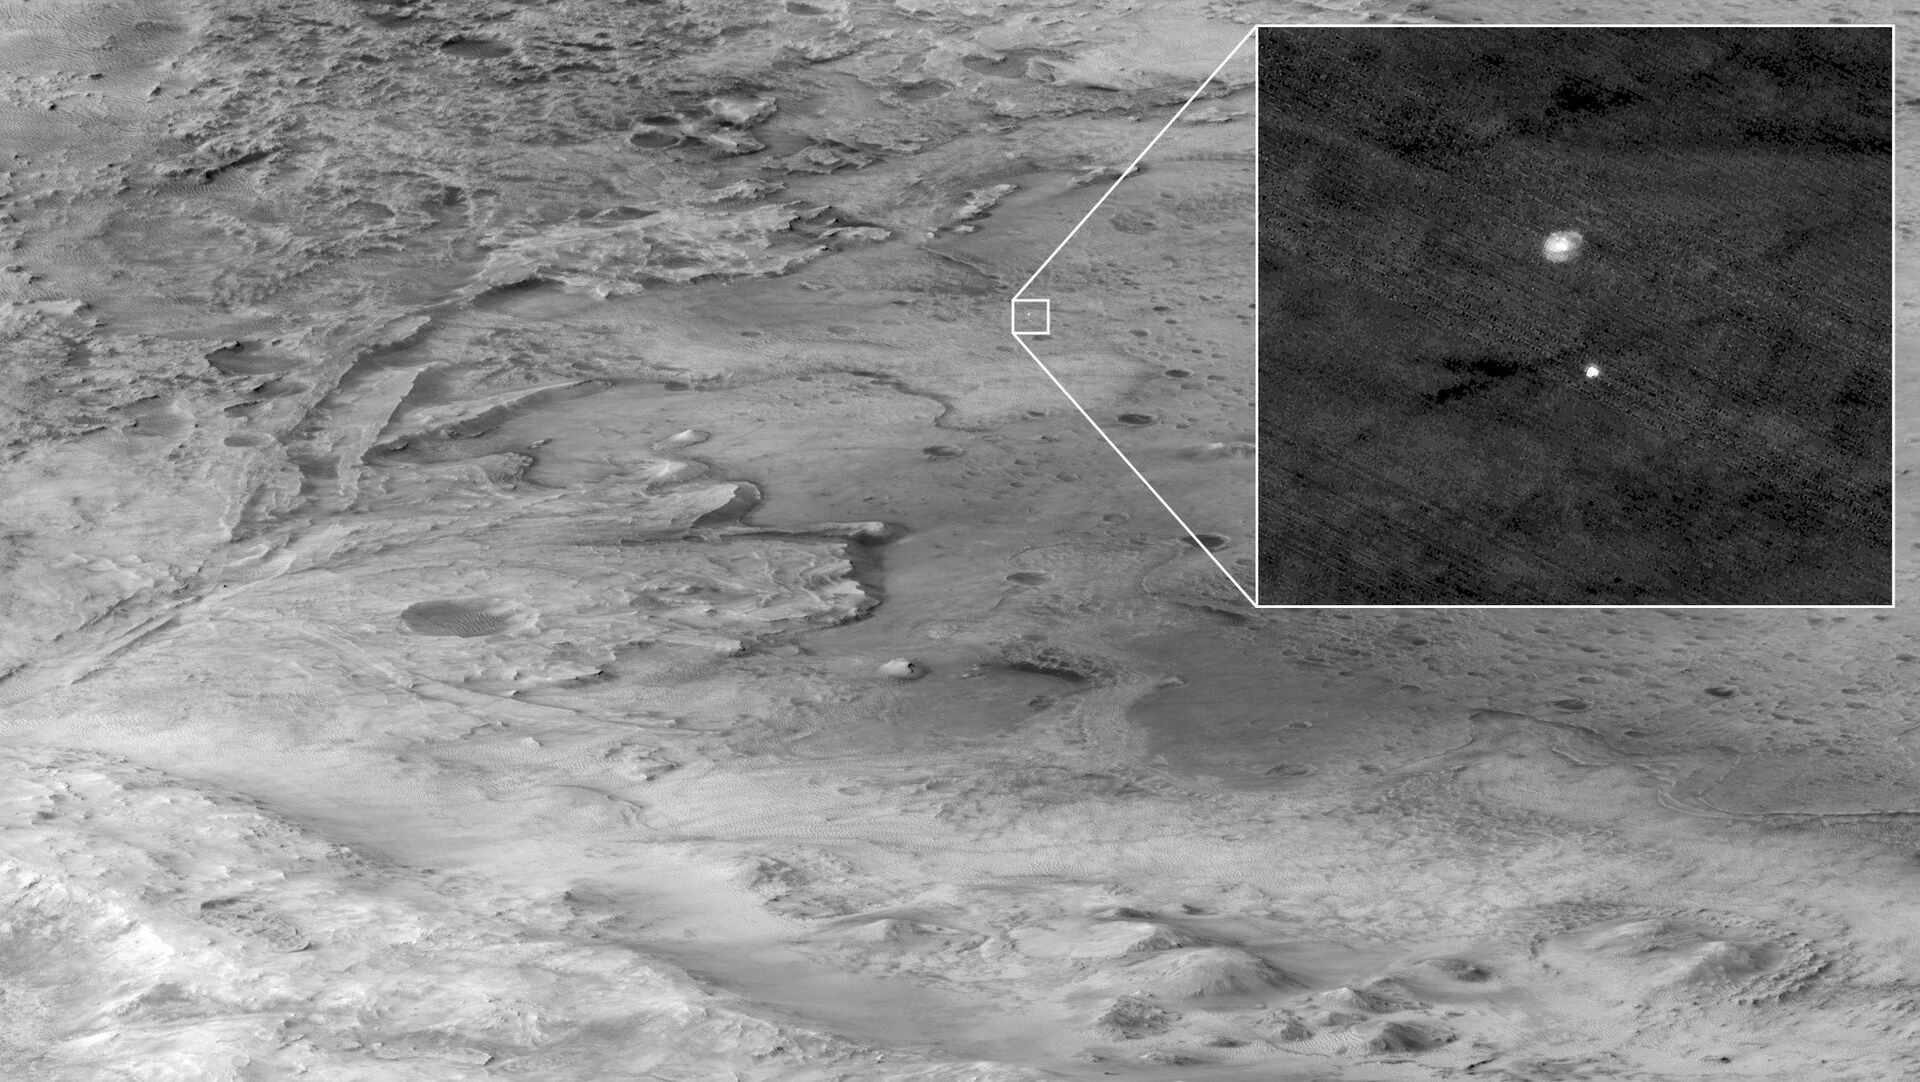 Perseverance Rover 'Doing Great' on Surface of Mars After Landing, NASA Engineer Says - Sputnik International, 1920, 19.02.2021